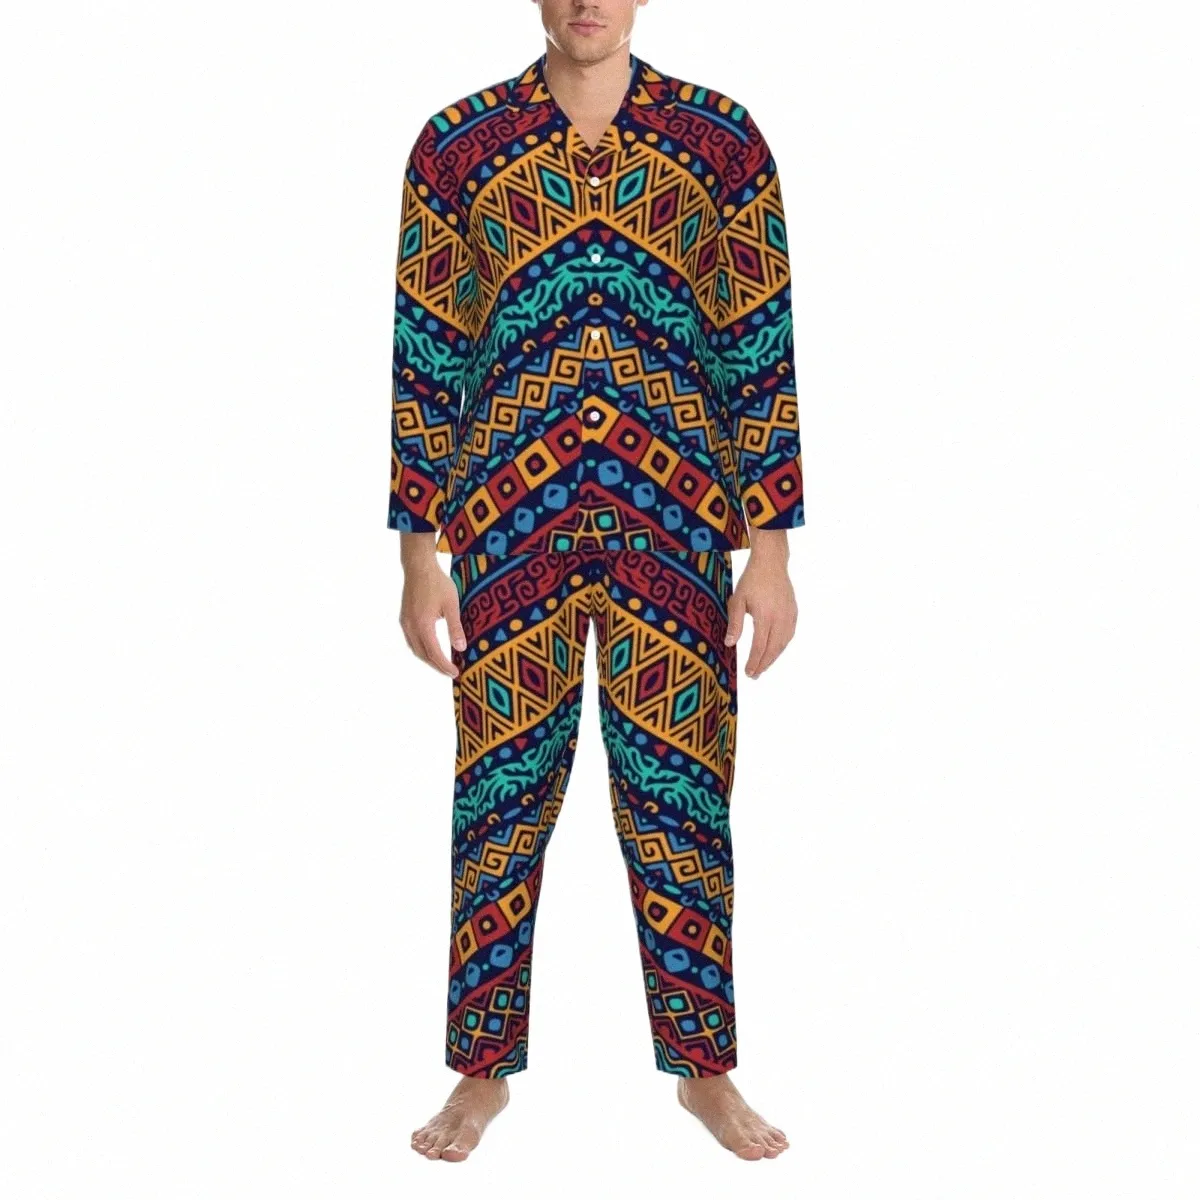 Africano Tribal Pijama Define Vintage Imprimir Fi Pijamas Homens LG-Sleeve Casual Noite 2 Peças Nightwear Tamanho Grande 2XL g8Pg #